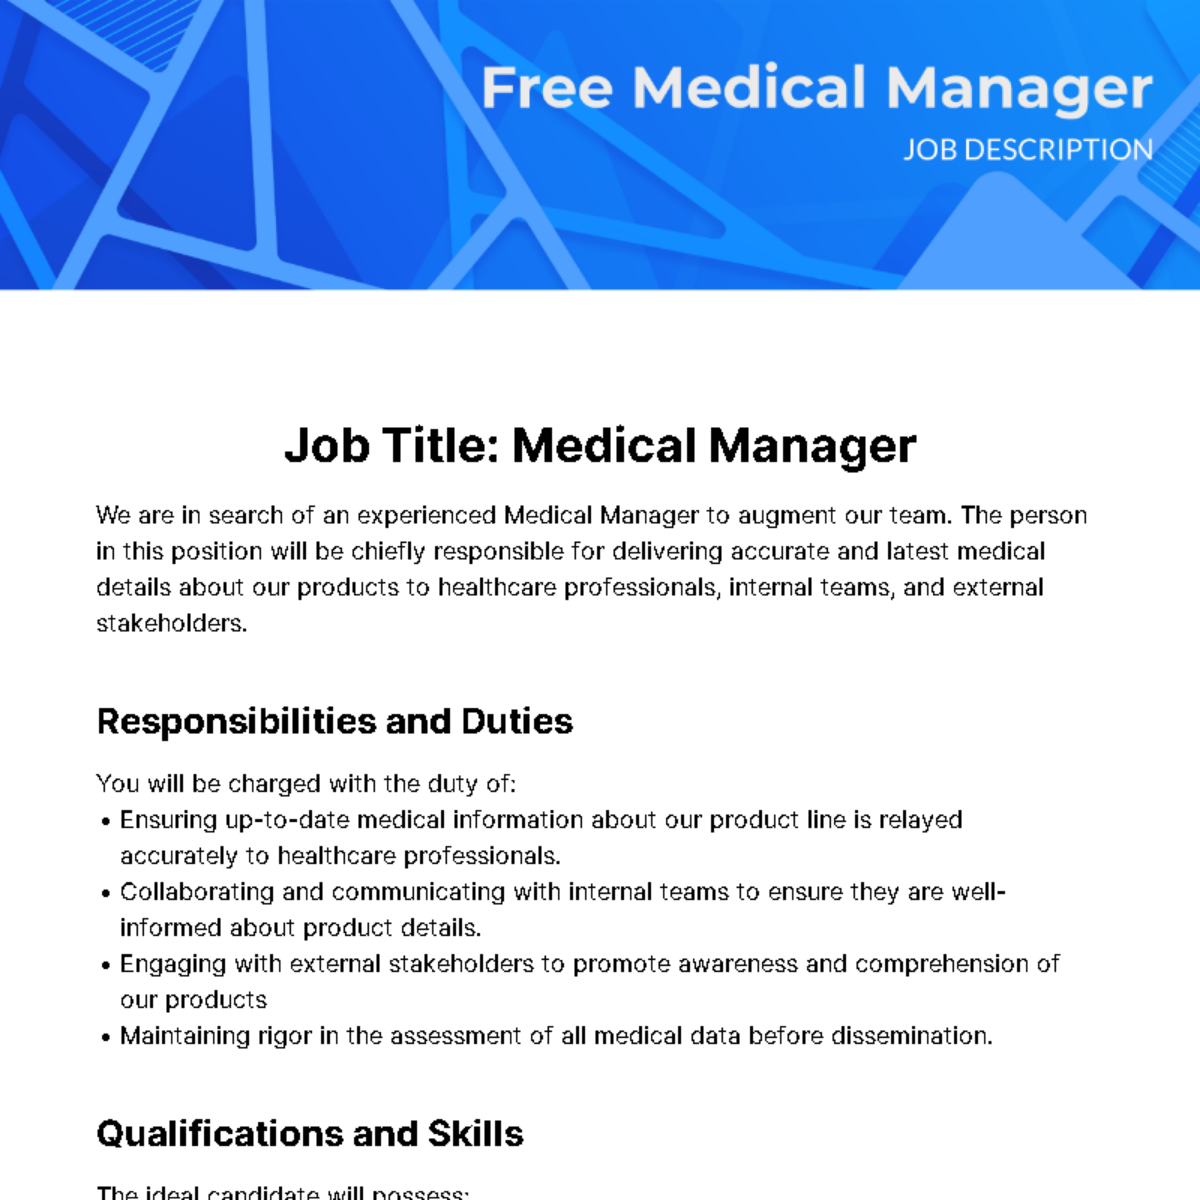 Free Medical Manager Job Description Template